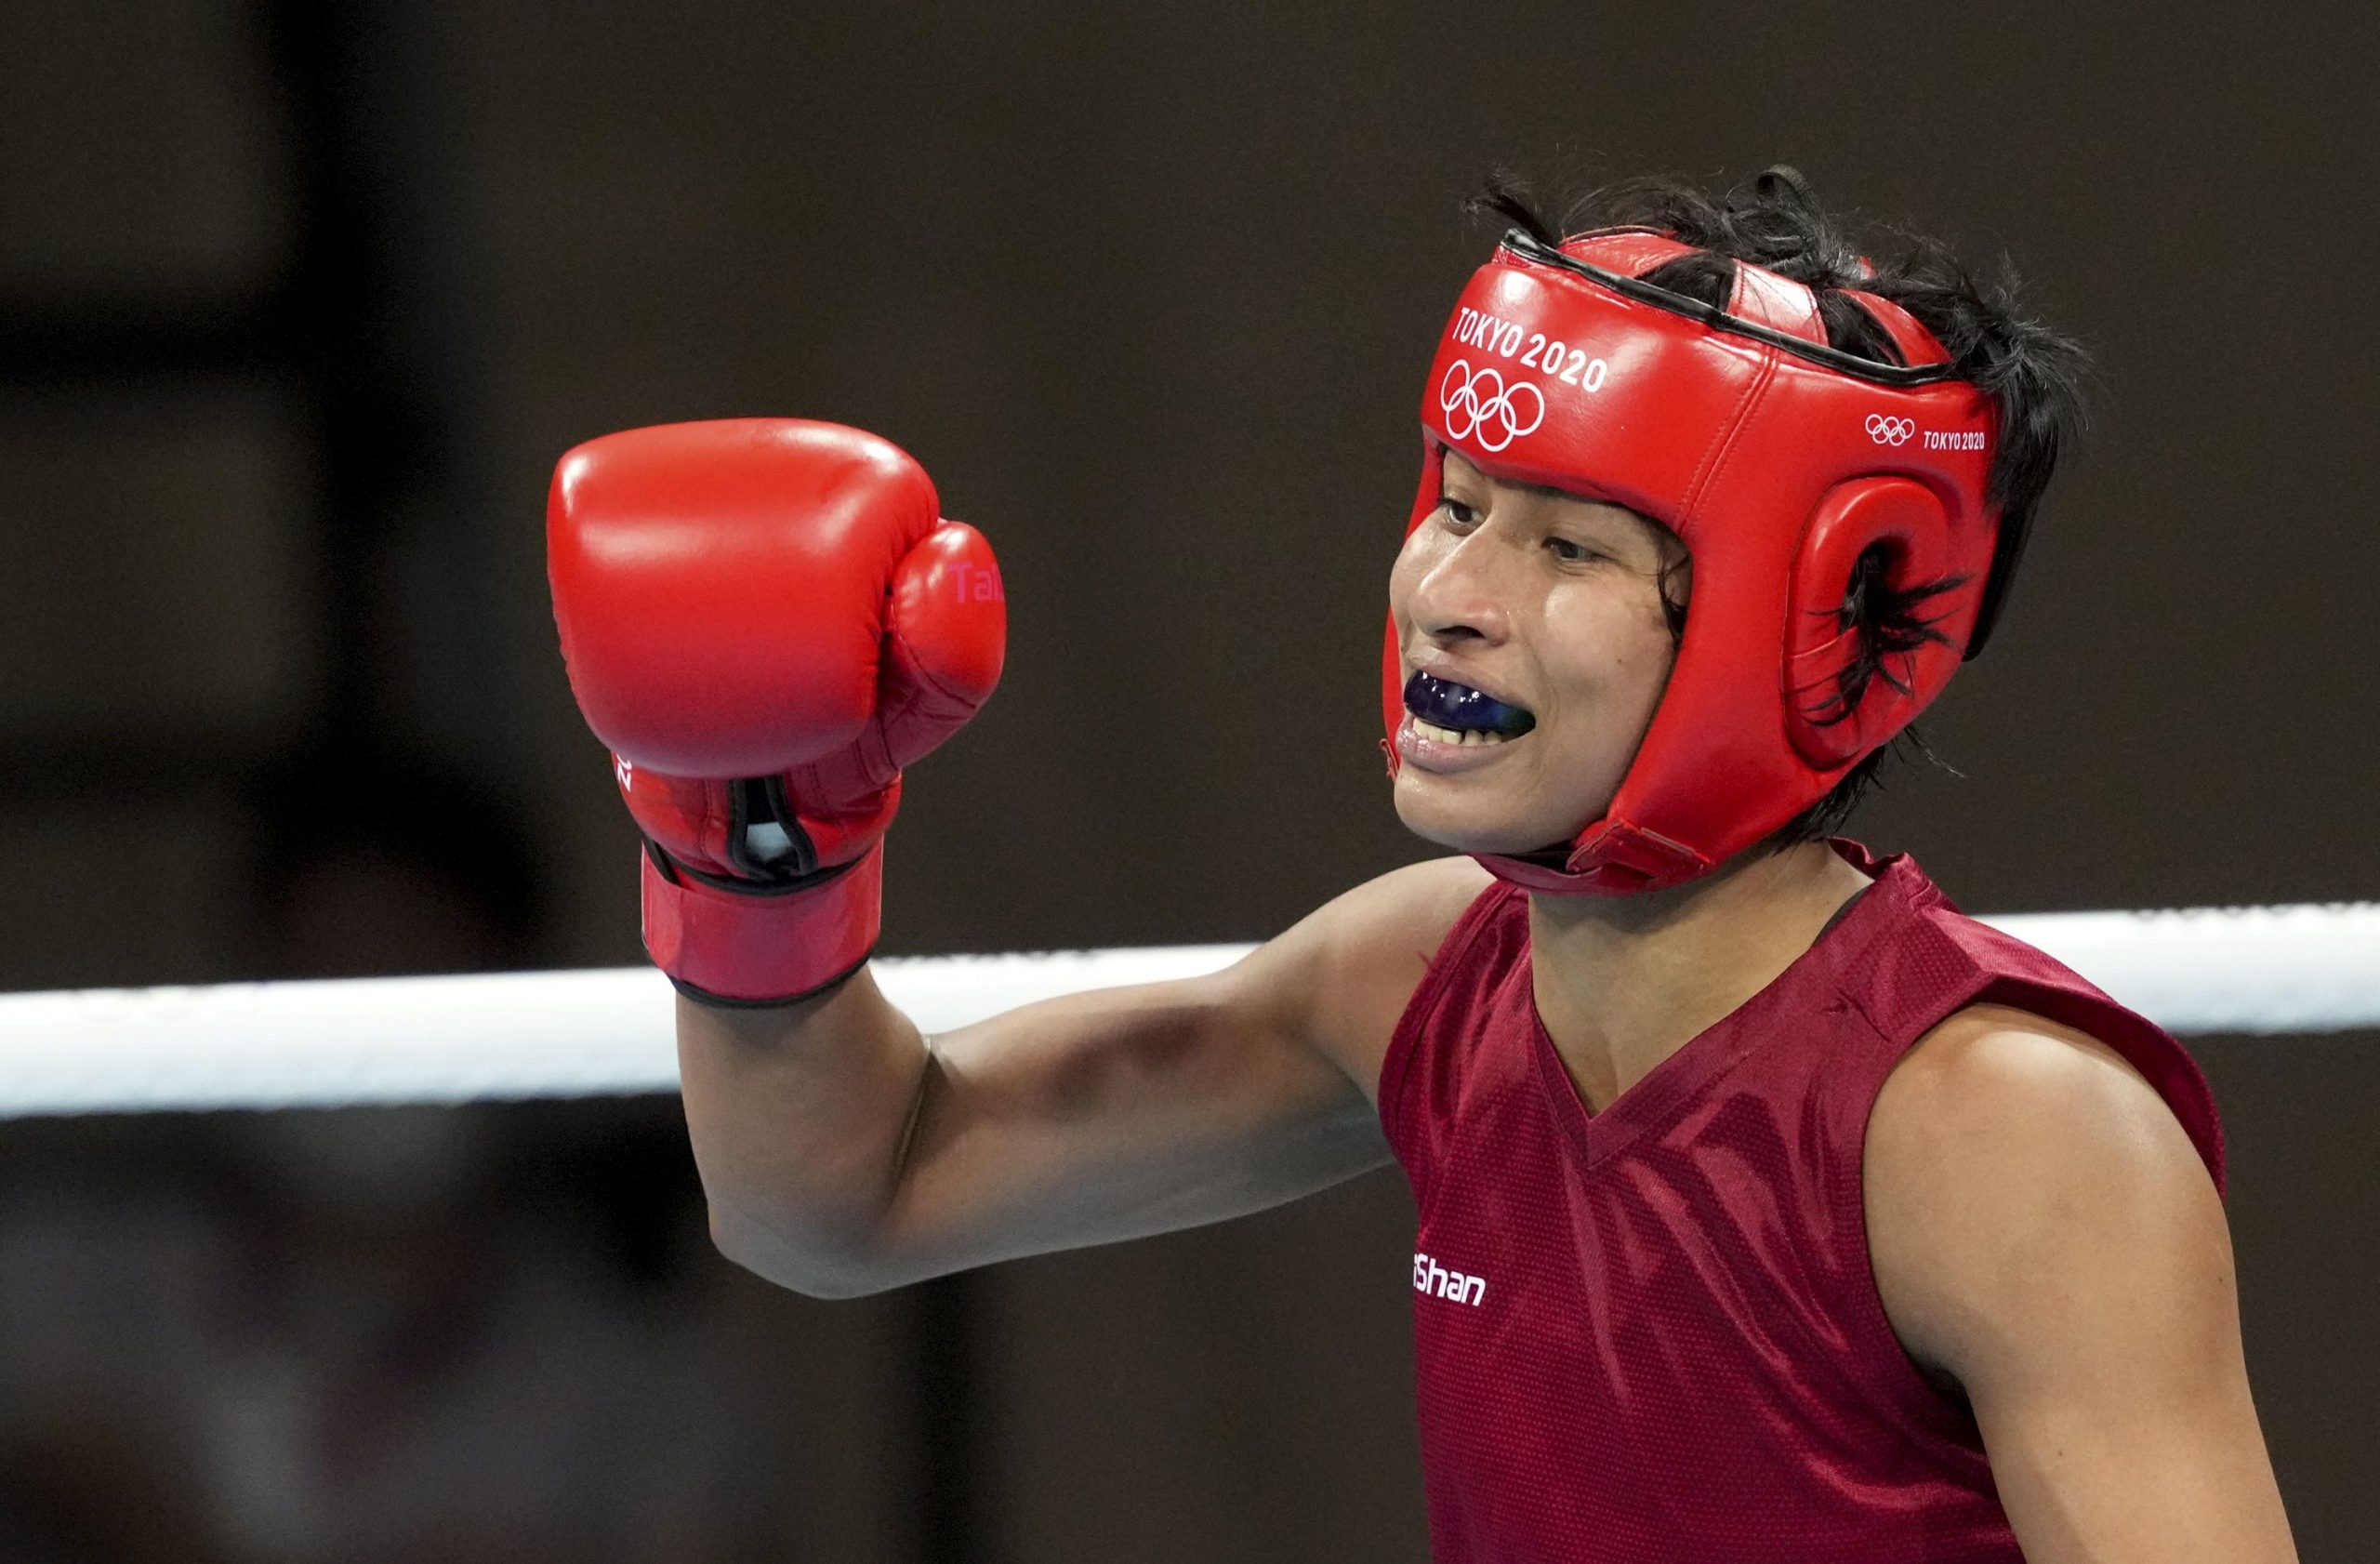 ‘Medal toh bas gold hota hai’: Boxer Lovlina Borgohain confident ahead of semis bout